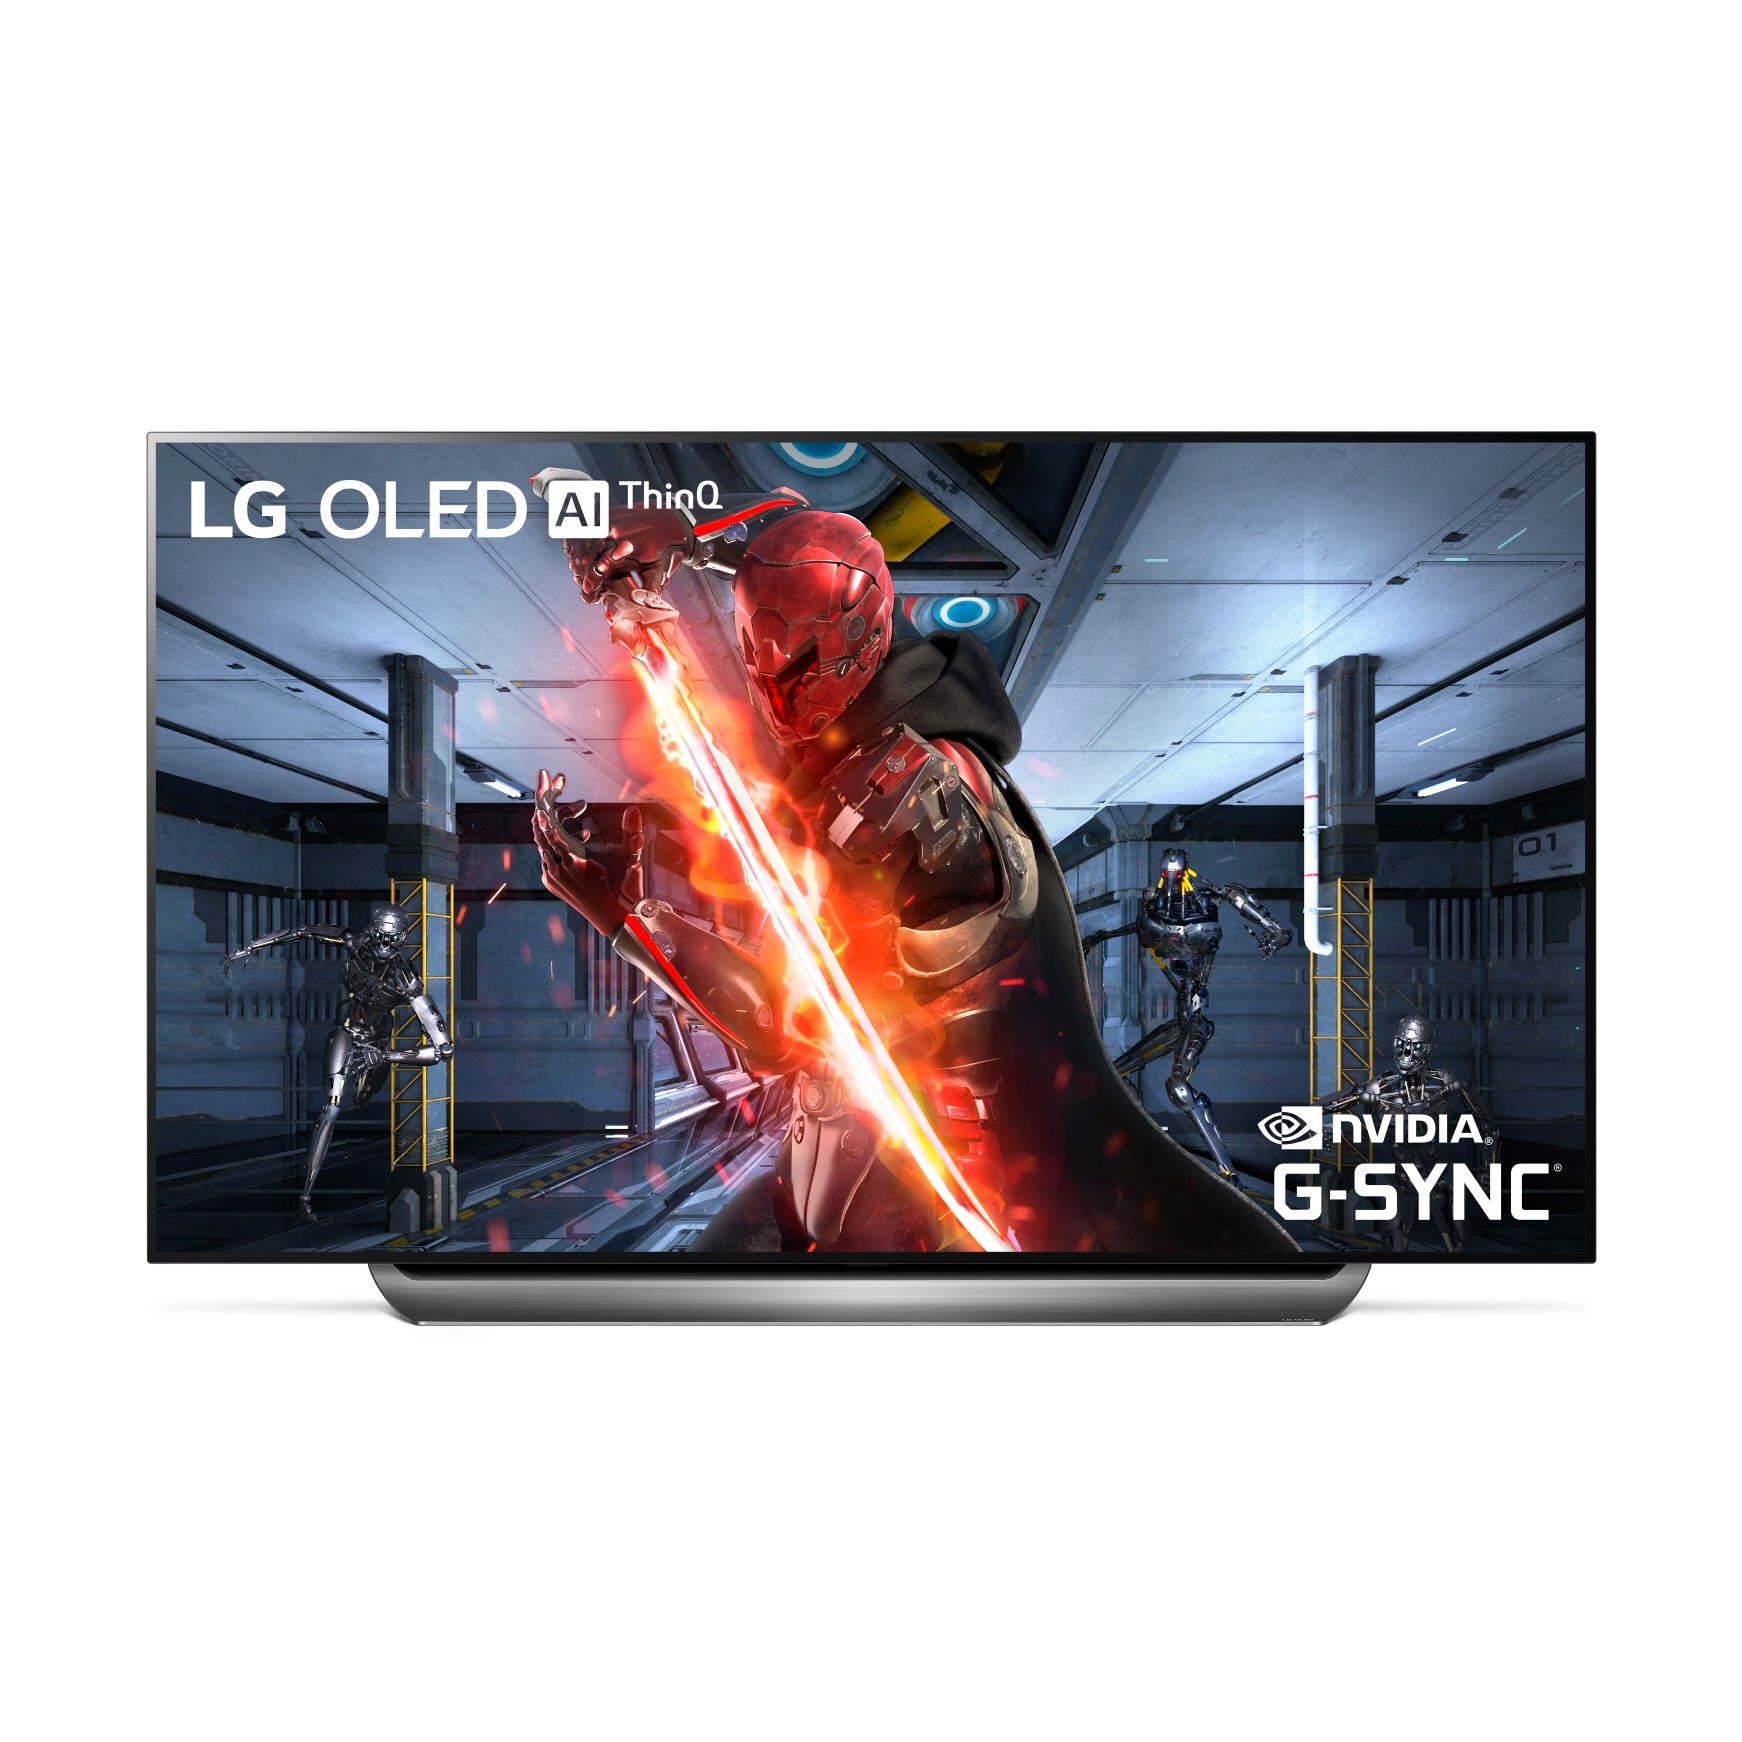 Media asset in full size related to 3dfxzone.it news item entitled as follows: LG aggiunge il supporto della tecnologia NVIDIA G-SYNC ai televisori OLED 4K | Image Name: news29970_LG-OLED-4K-TV-G-SYNC_1.jpg